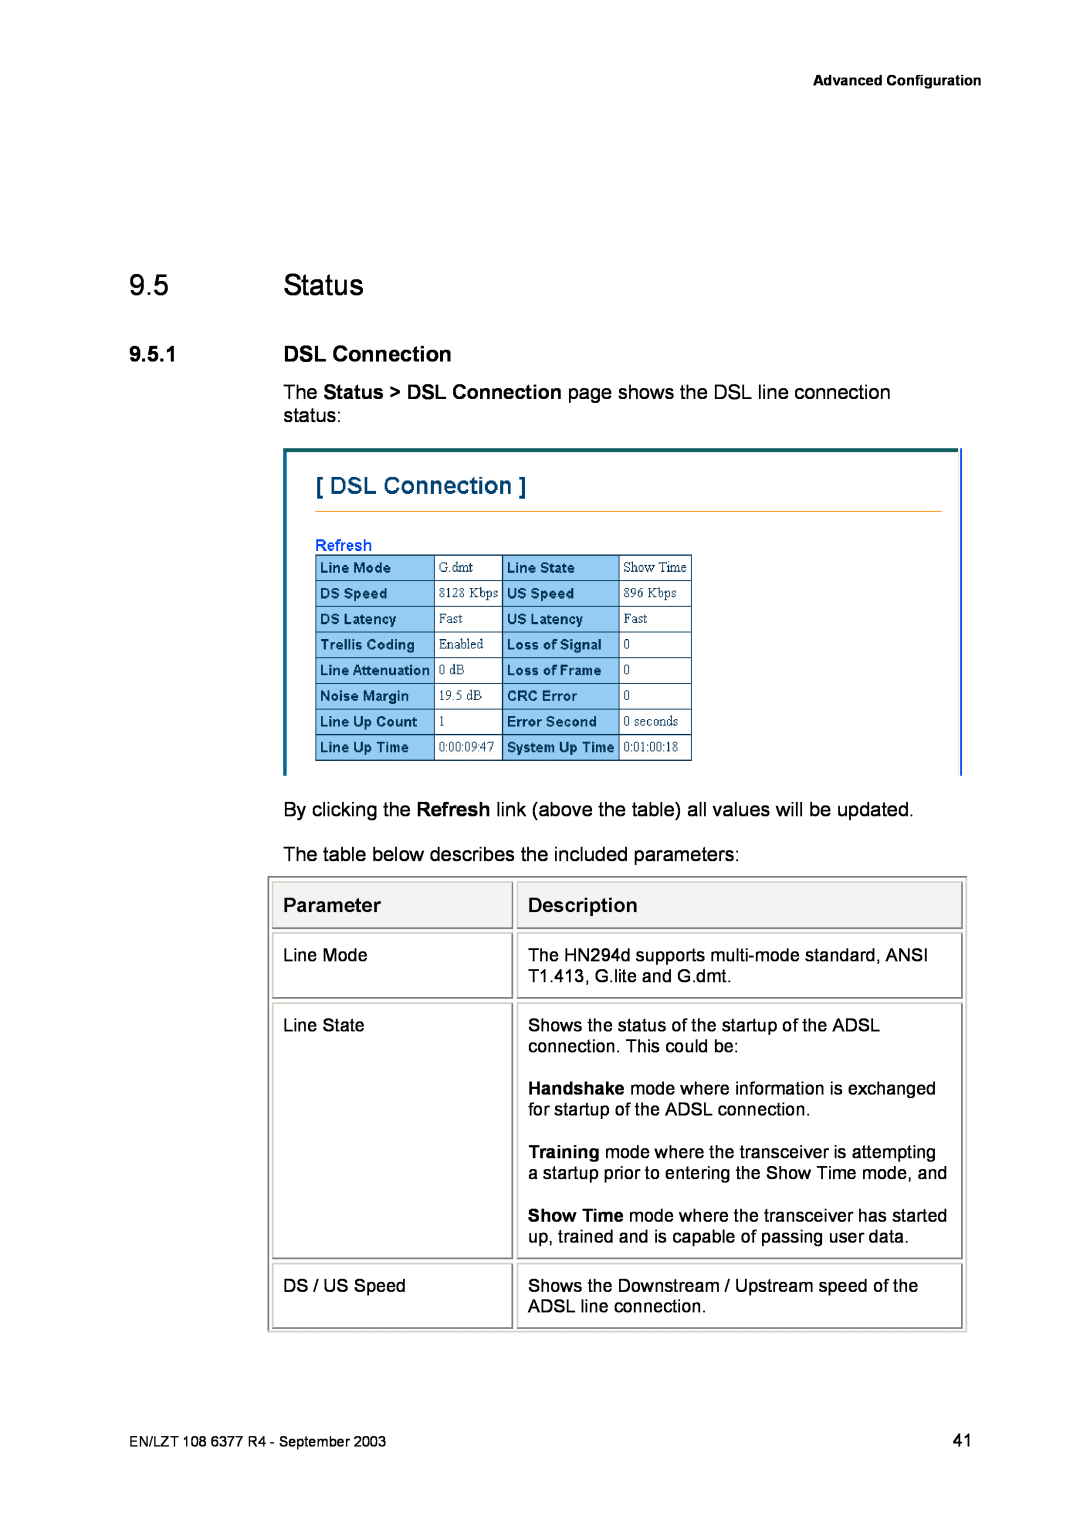 Garmin HN294DP/DI manual Status, DSL Connection, Parameter, Description 